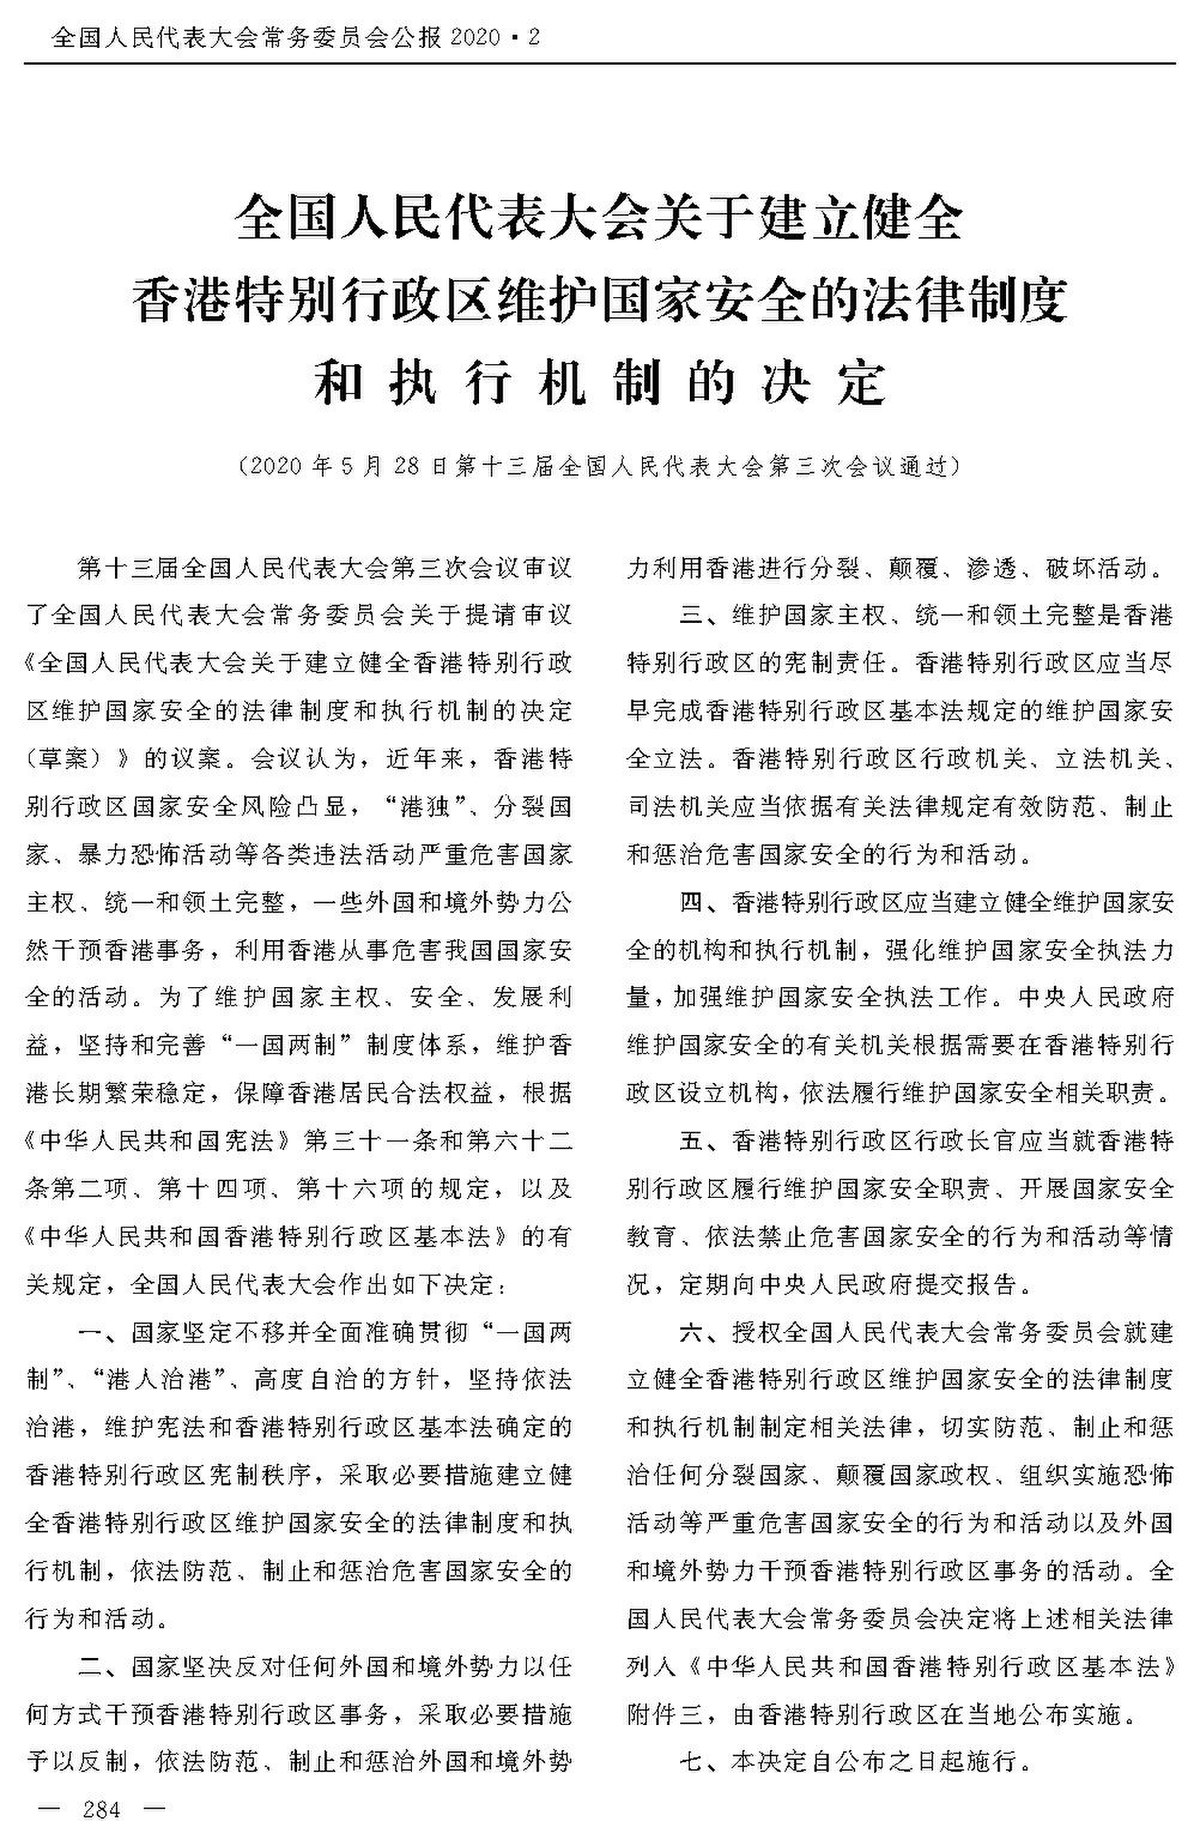 File 全国人民代表大会关于建立健全香港特别行政区维护国家安全的法律制度和执行机制的决定 Pdf Wikimedia Commons